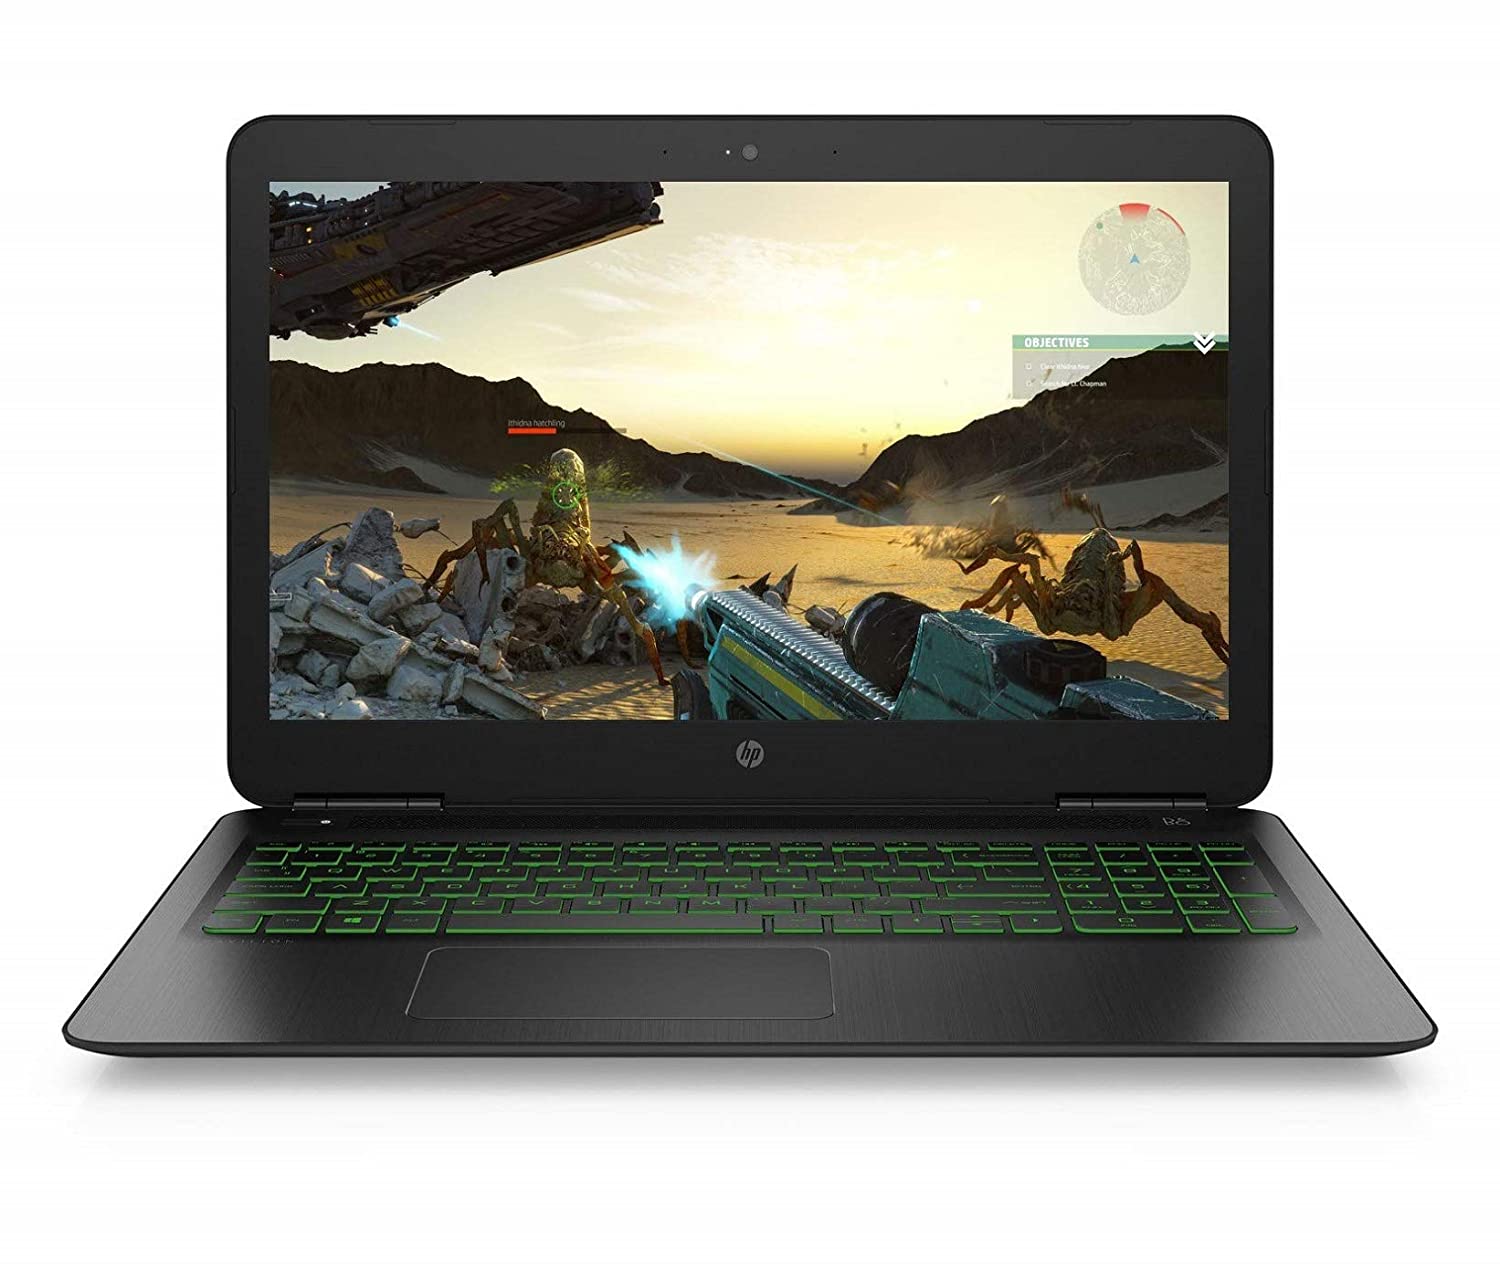 HP Pavilion Intel i5-9300H 9th Gen processor best Gaming laptop 